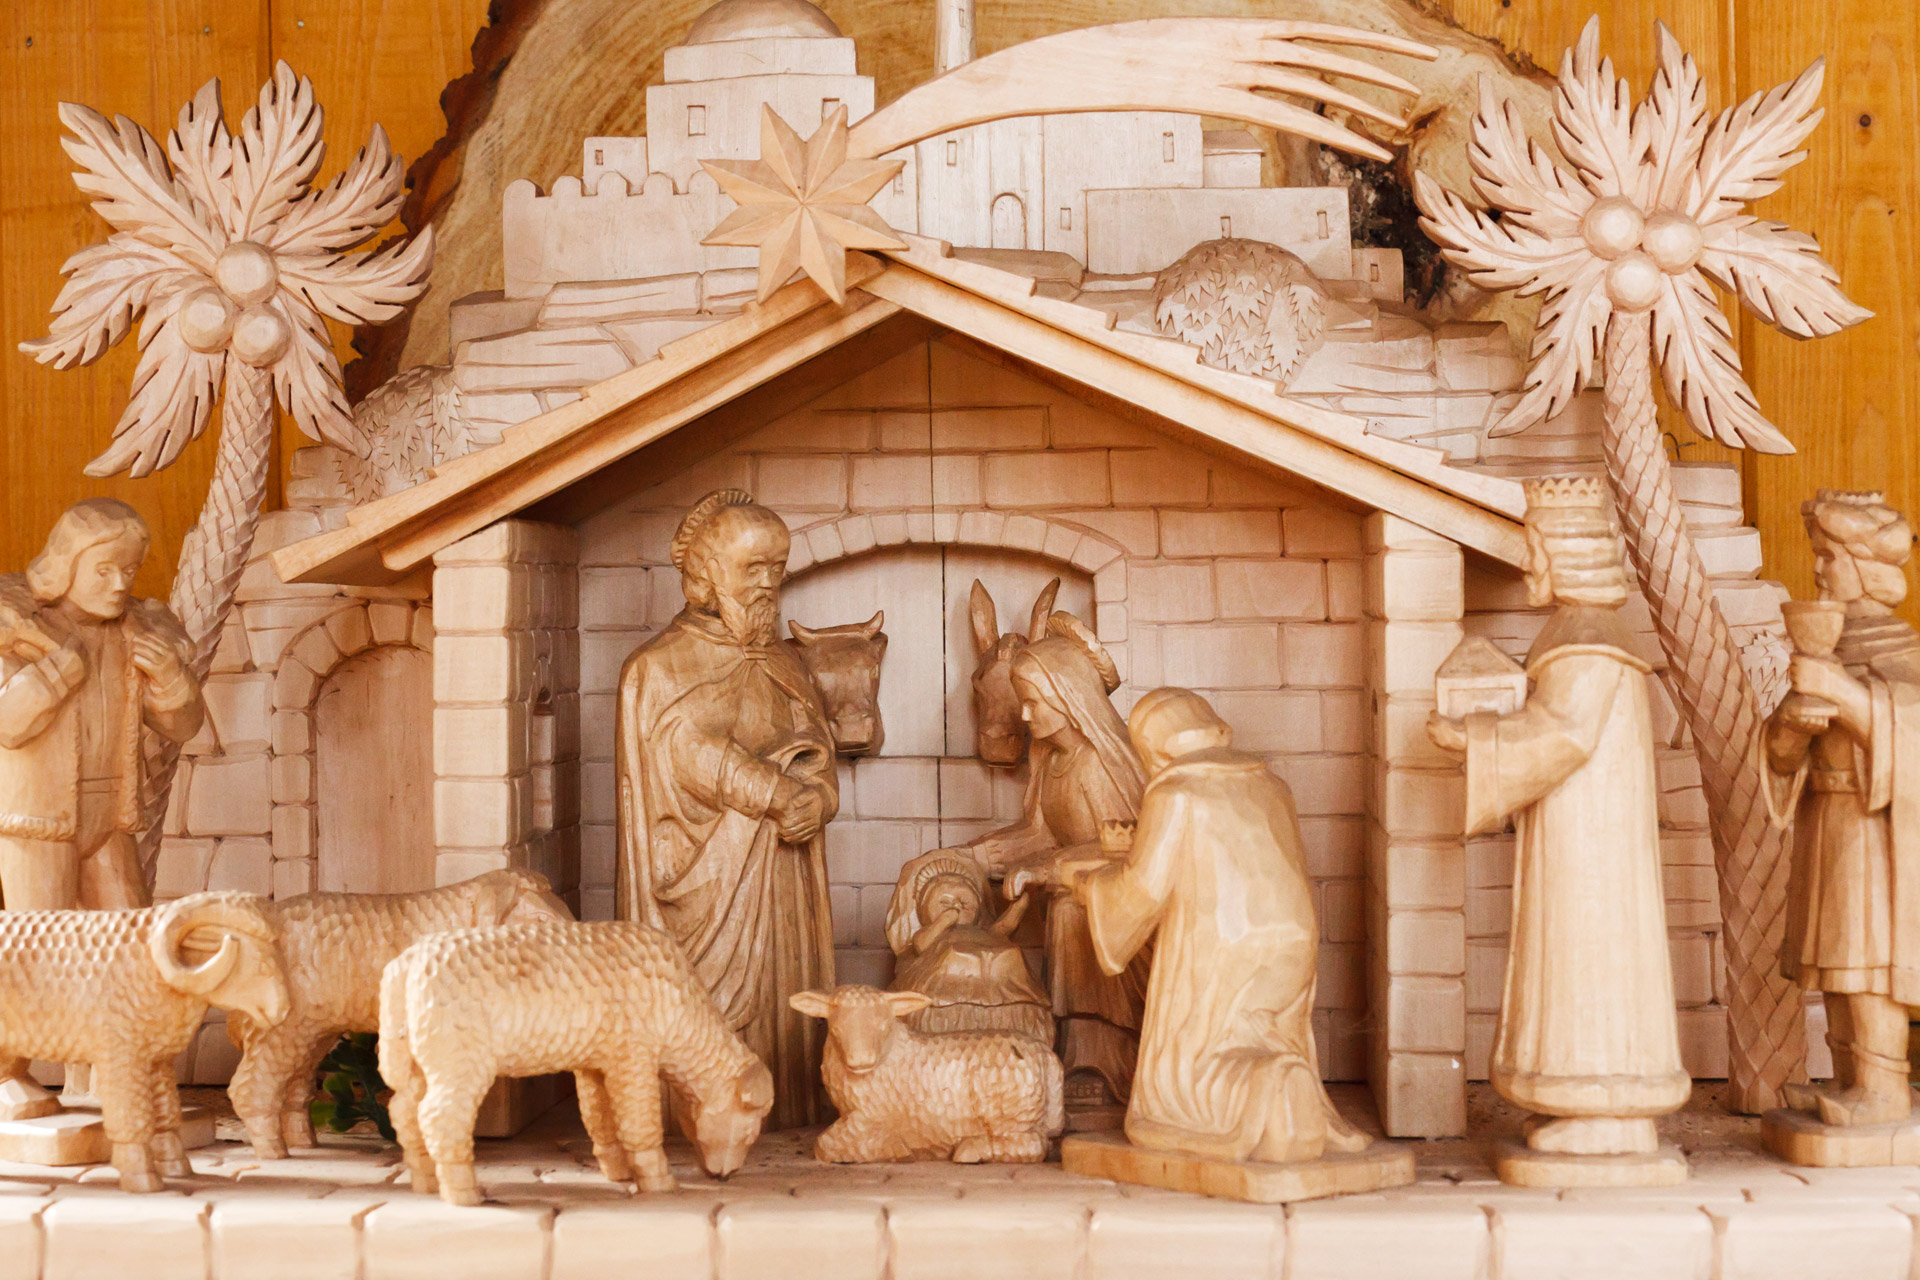 Carved Wooden Christmas Nativity Scene by Vera Kratochvil